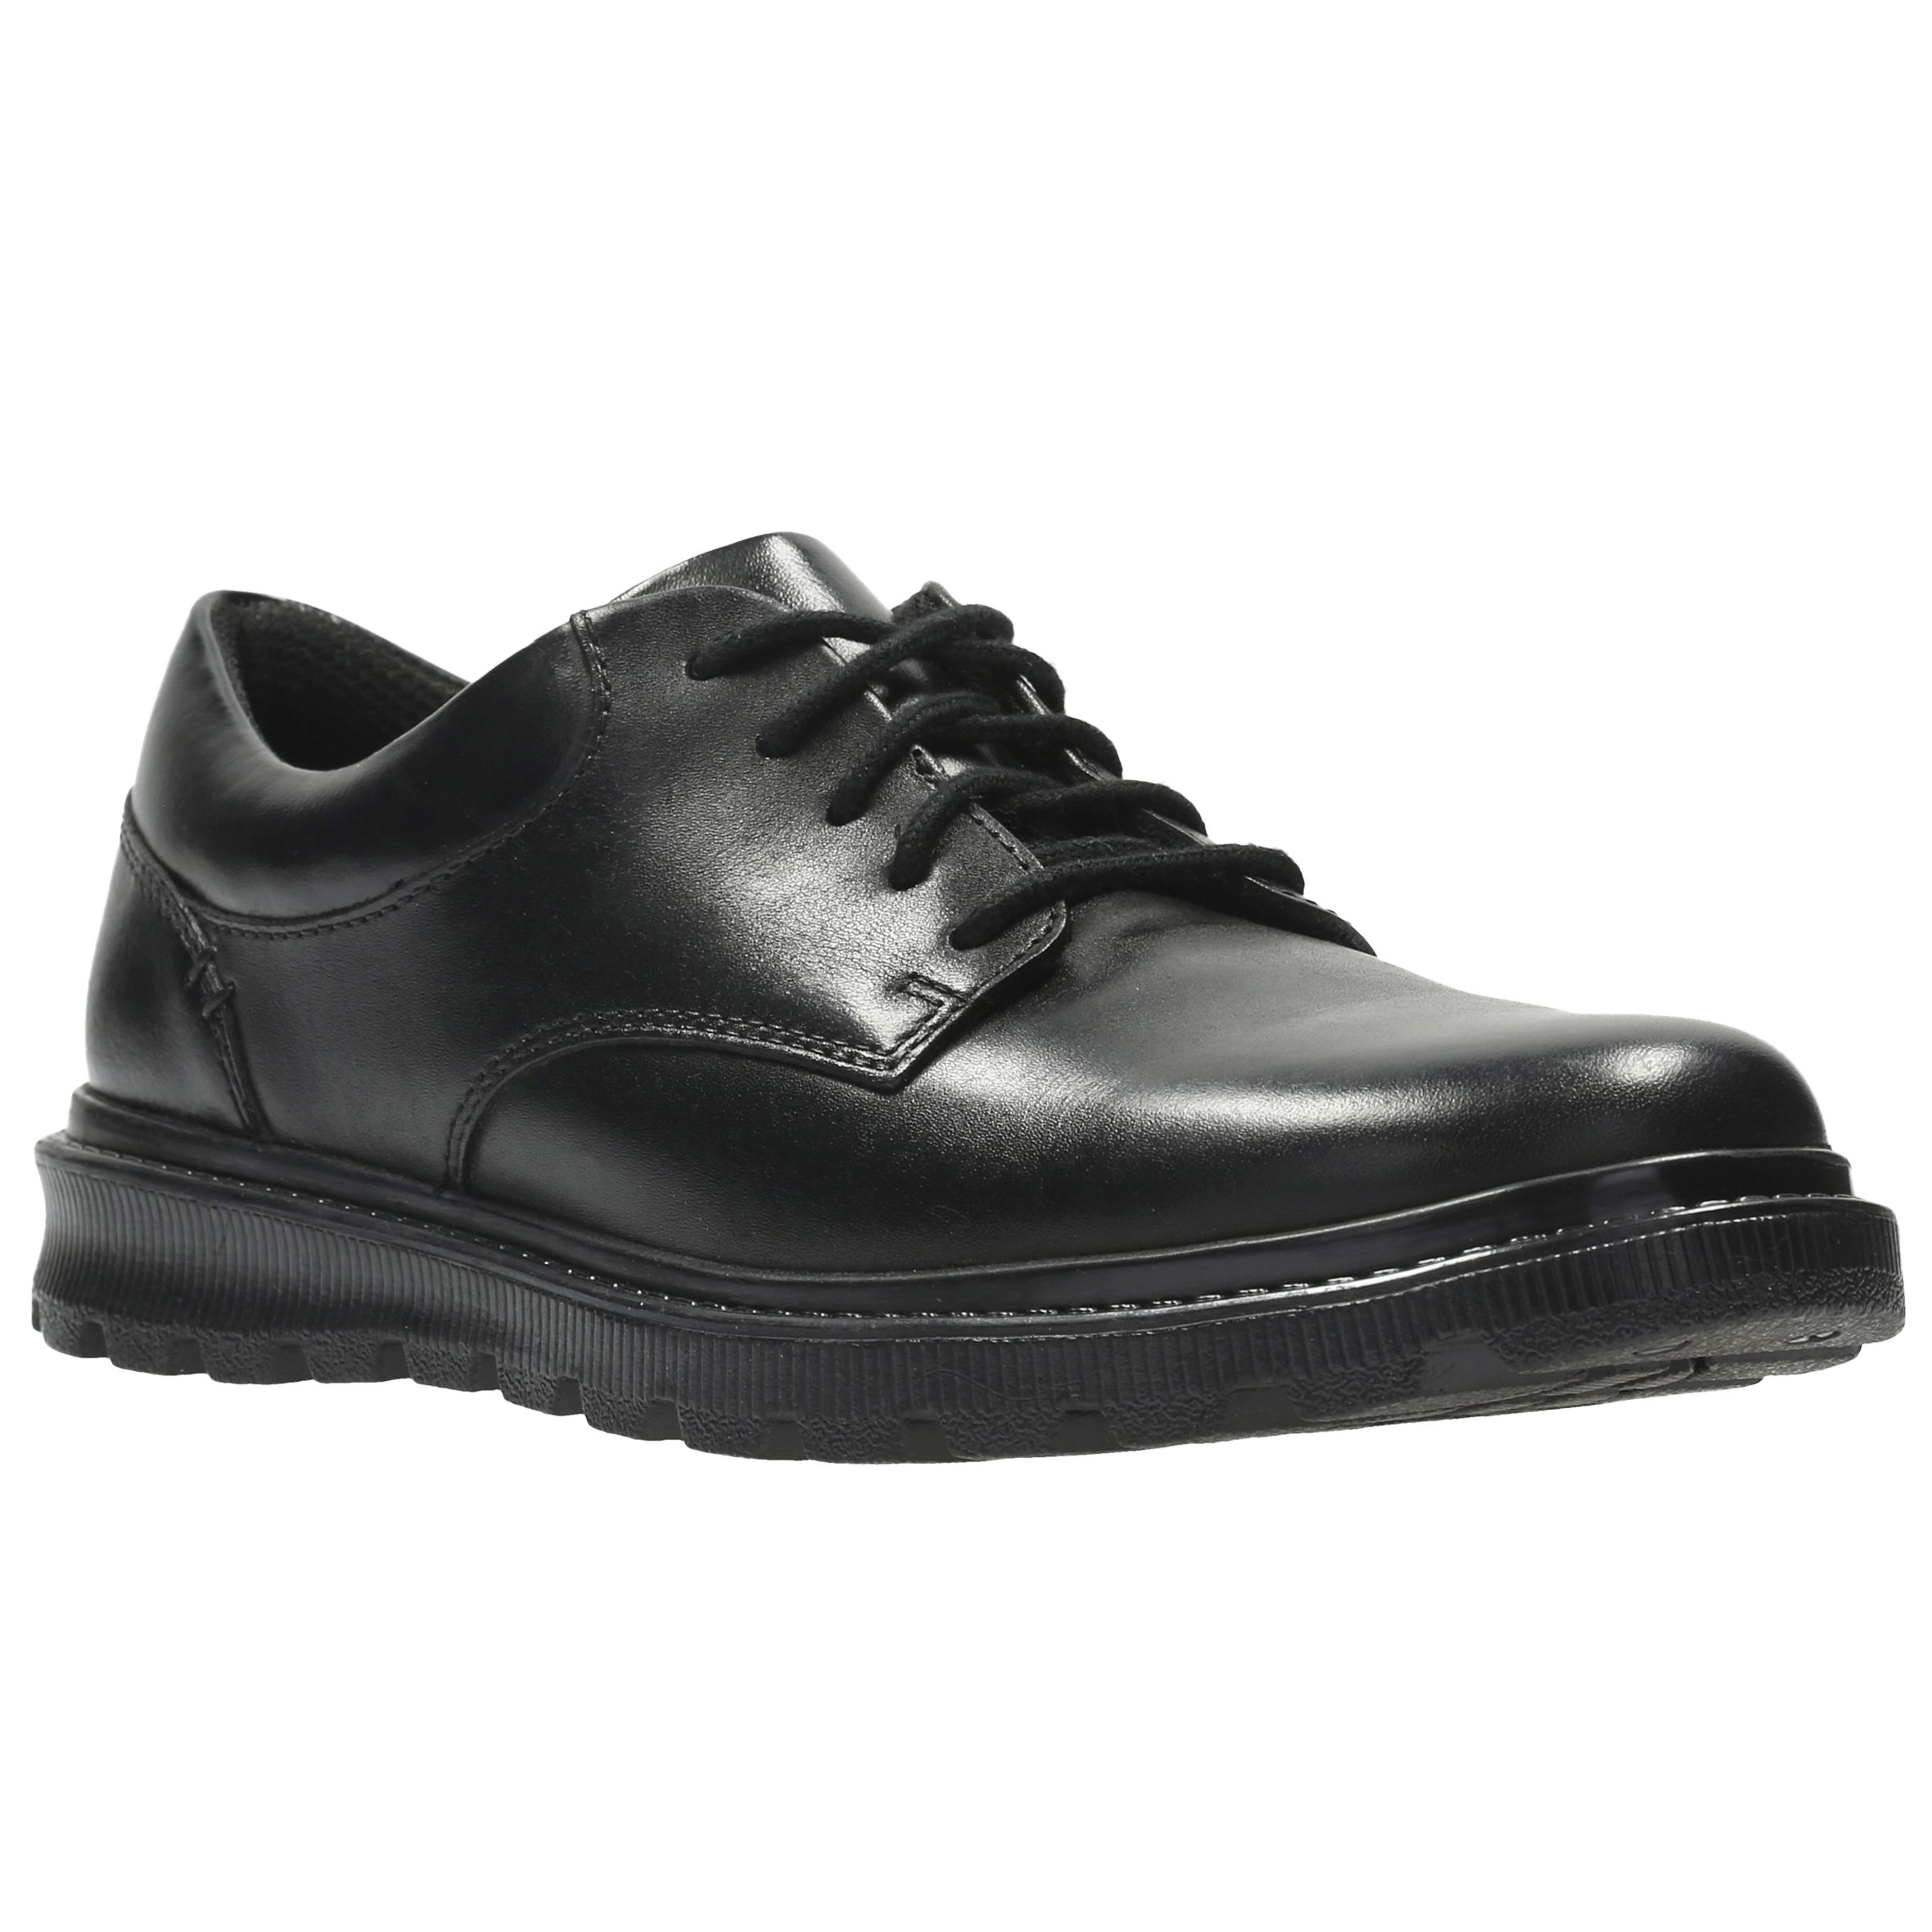 Mayes Trek Leather School Shoes, Black 